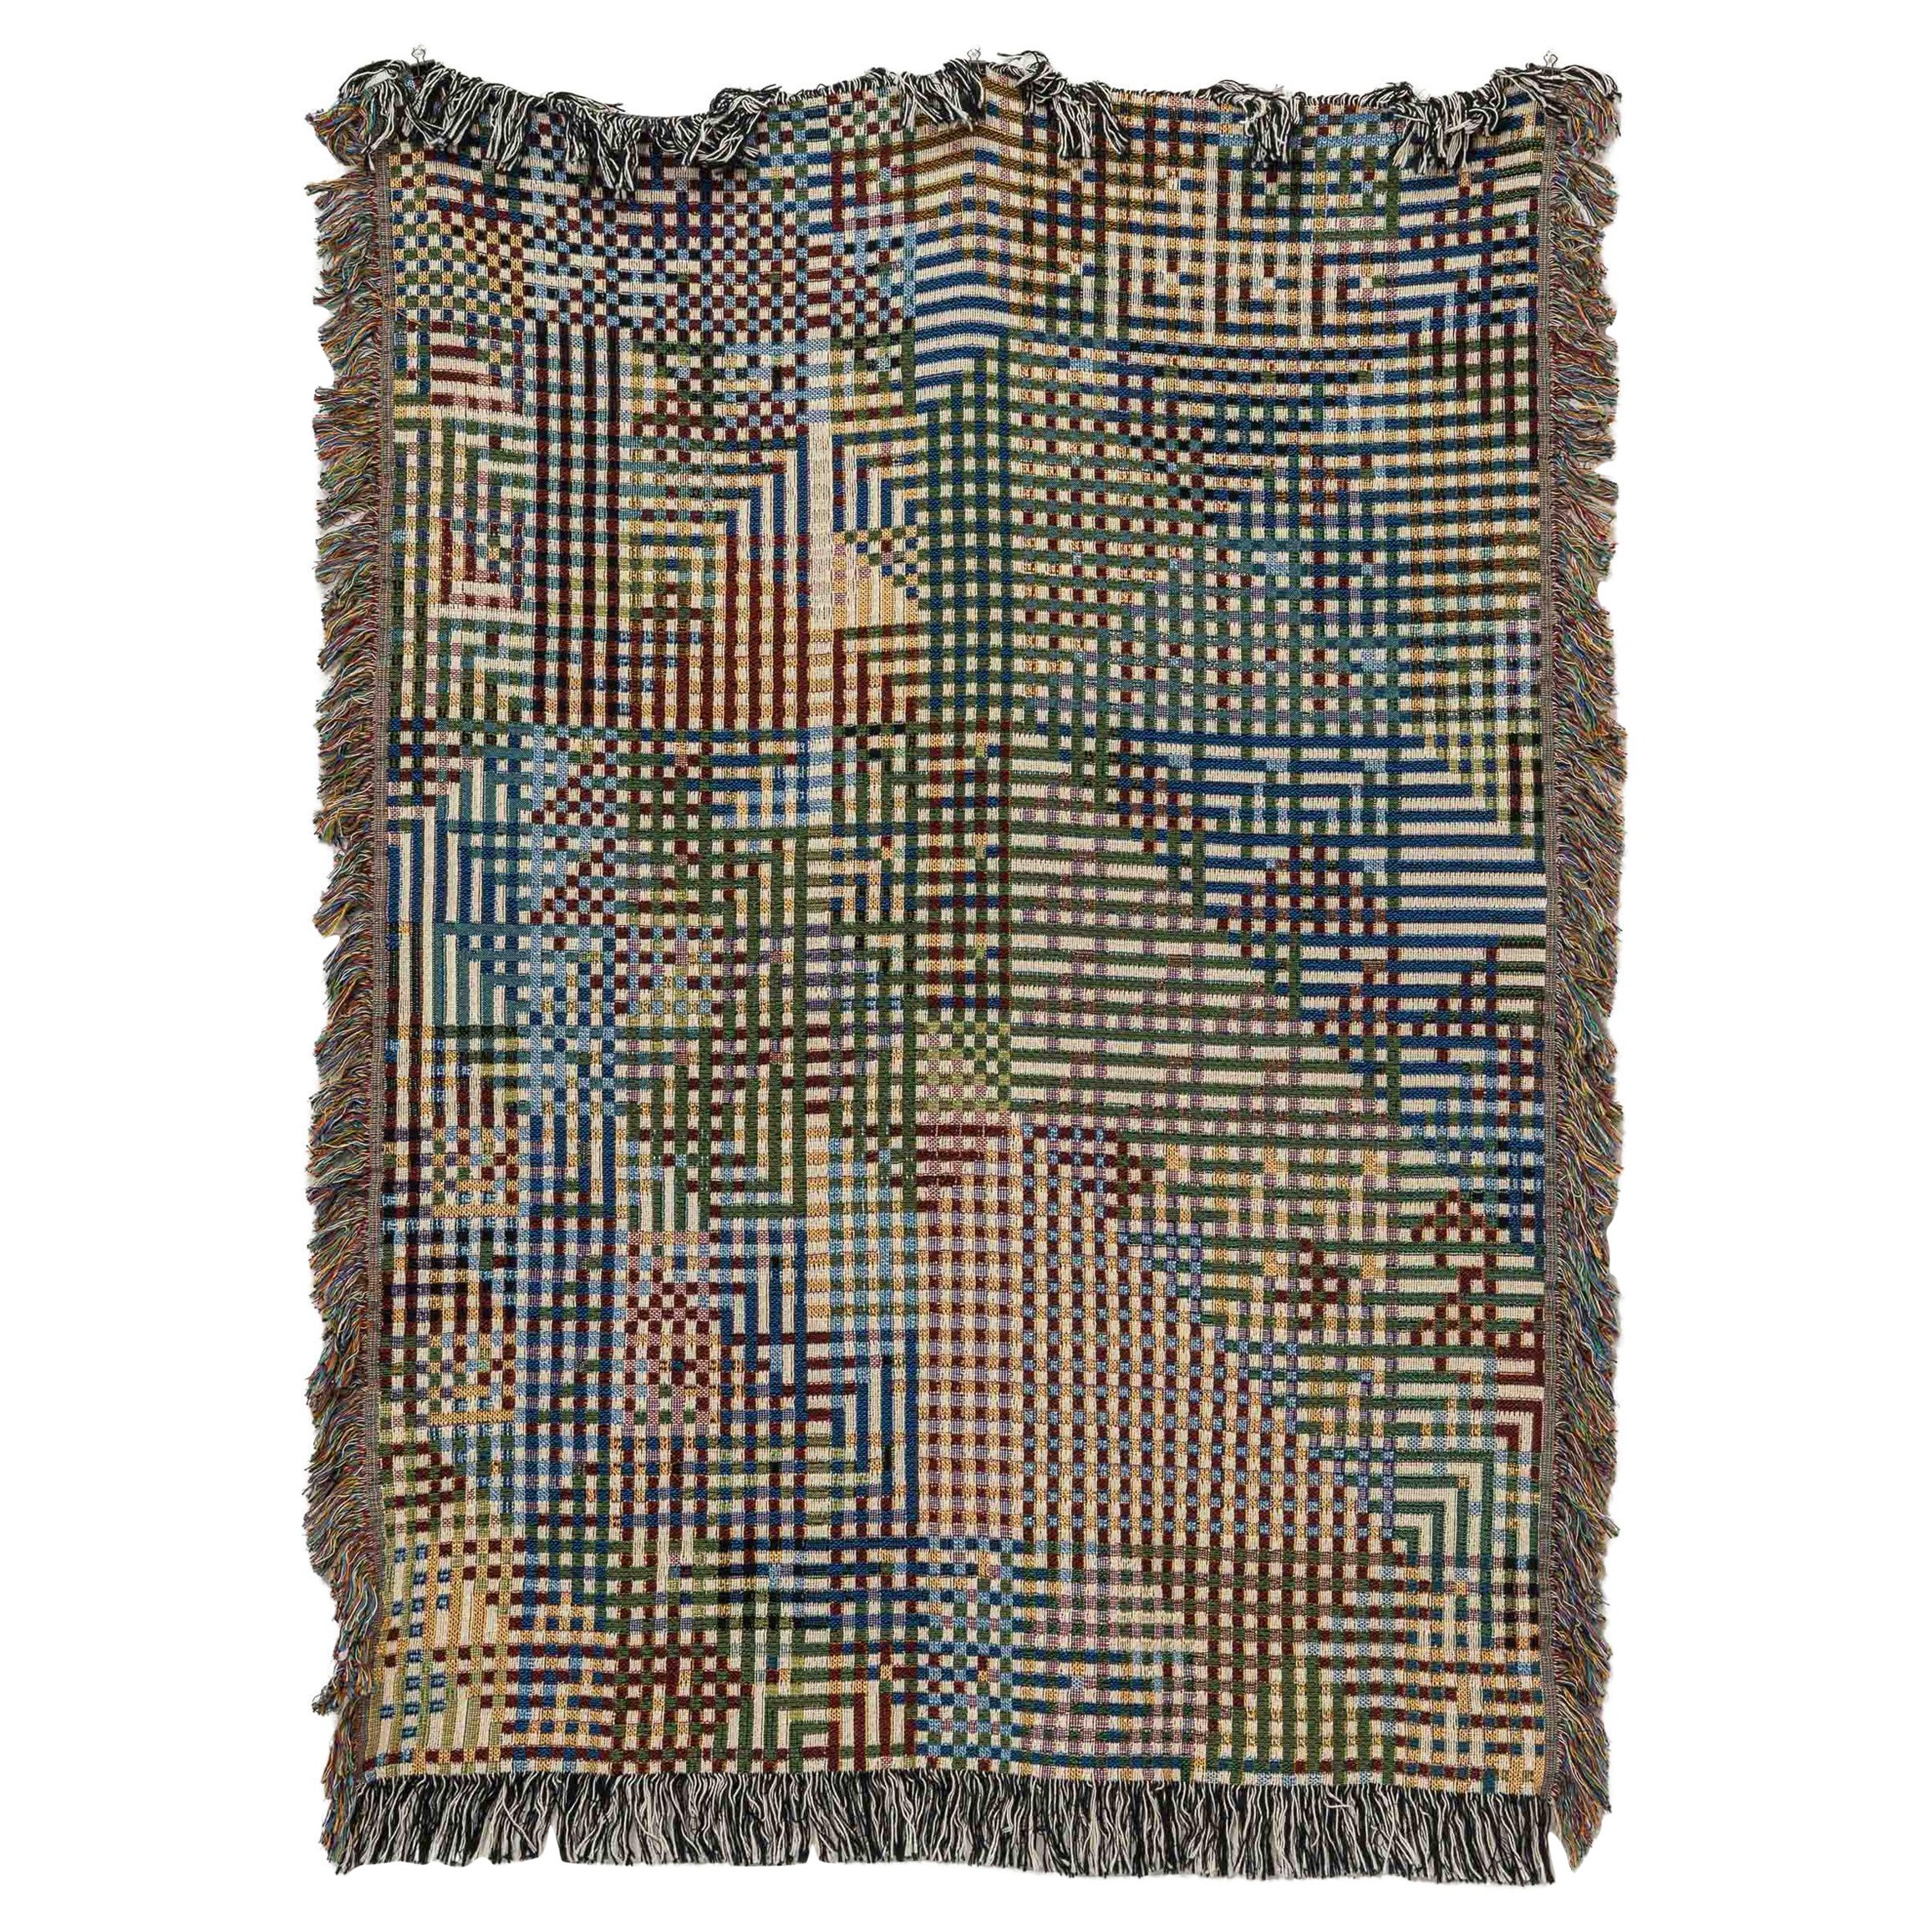 Bit Map Throw Blanket 03, 100% Baumwolle Woven Contemporary Pixel Art, 60 "x80" im Angebot